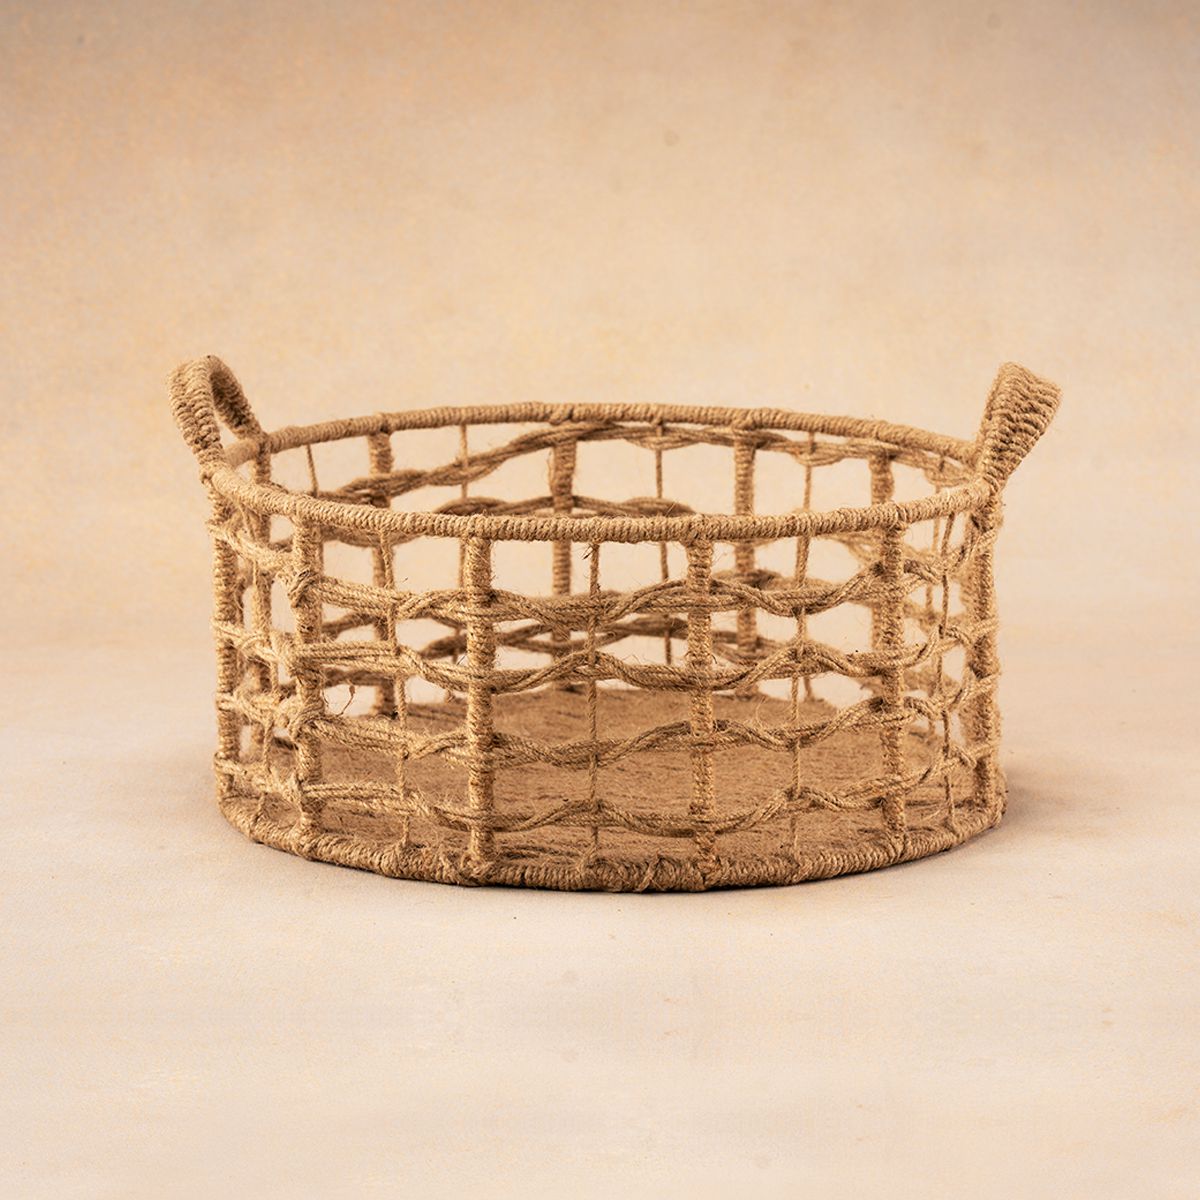 Weavers Basket